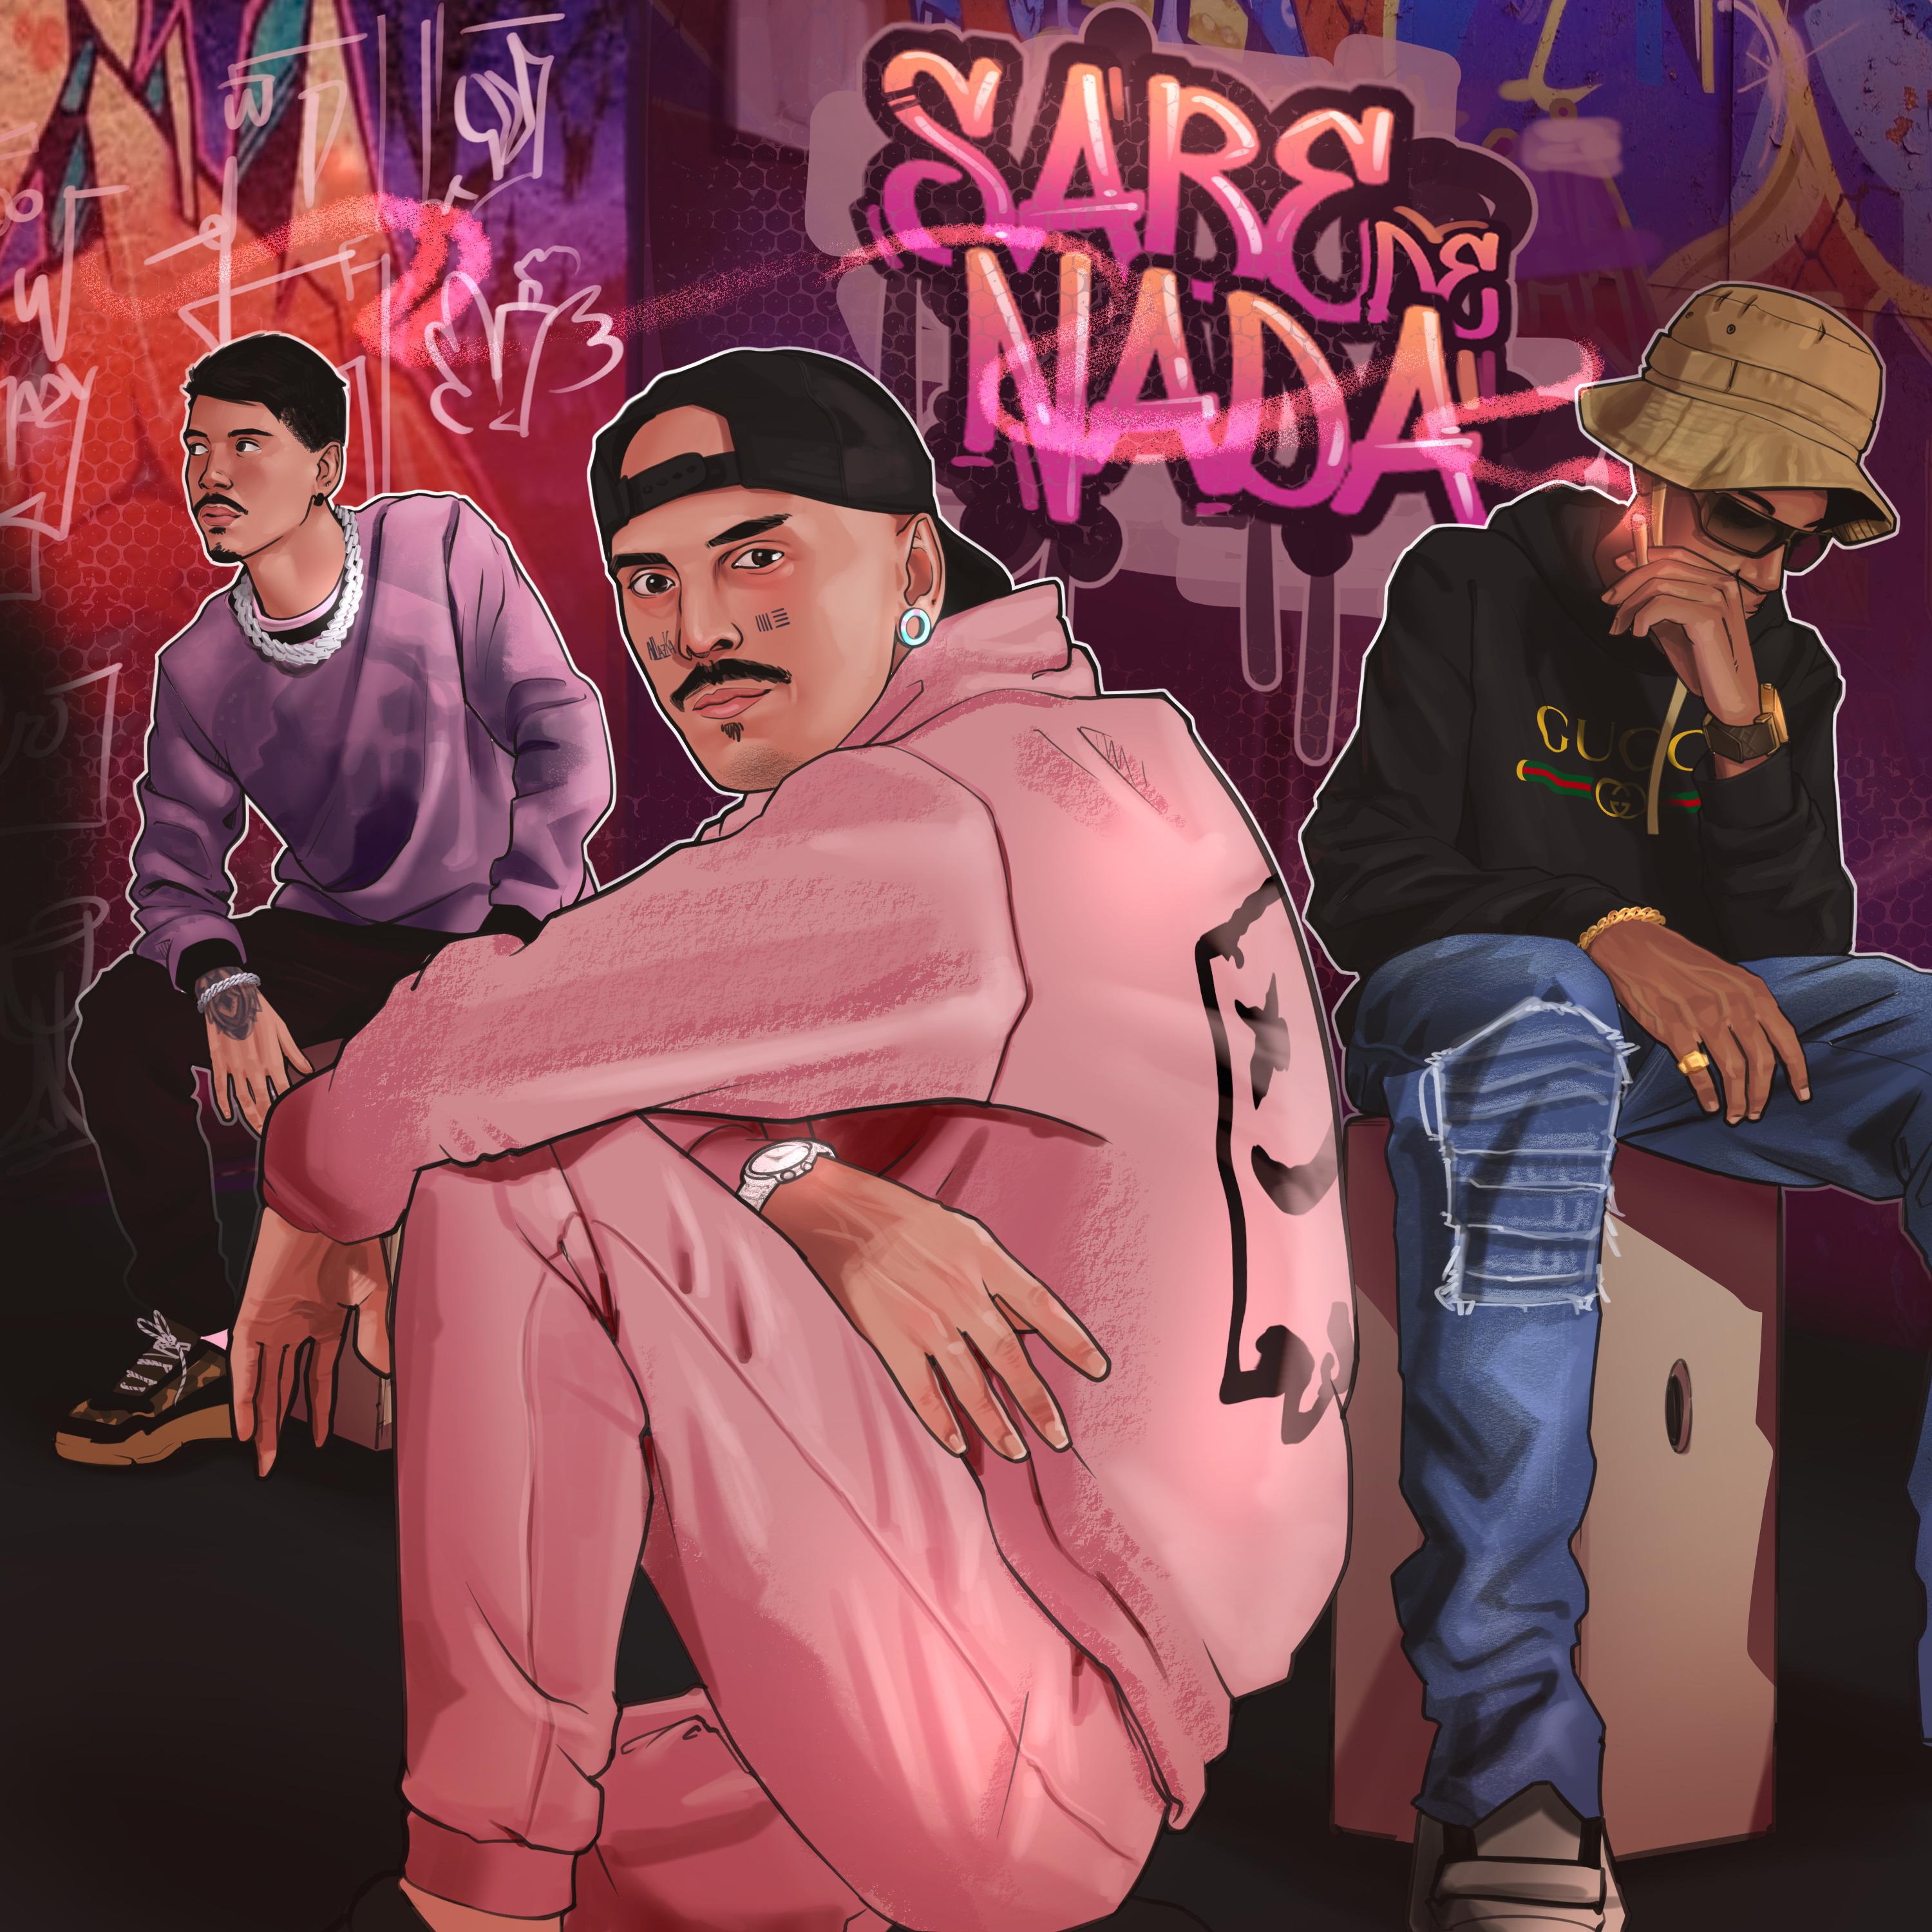 Постер альбома Sabe de Nada